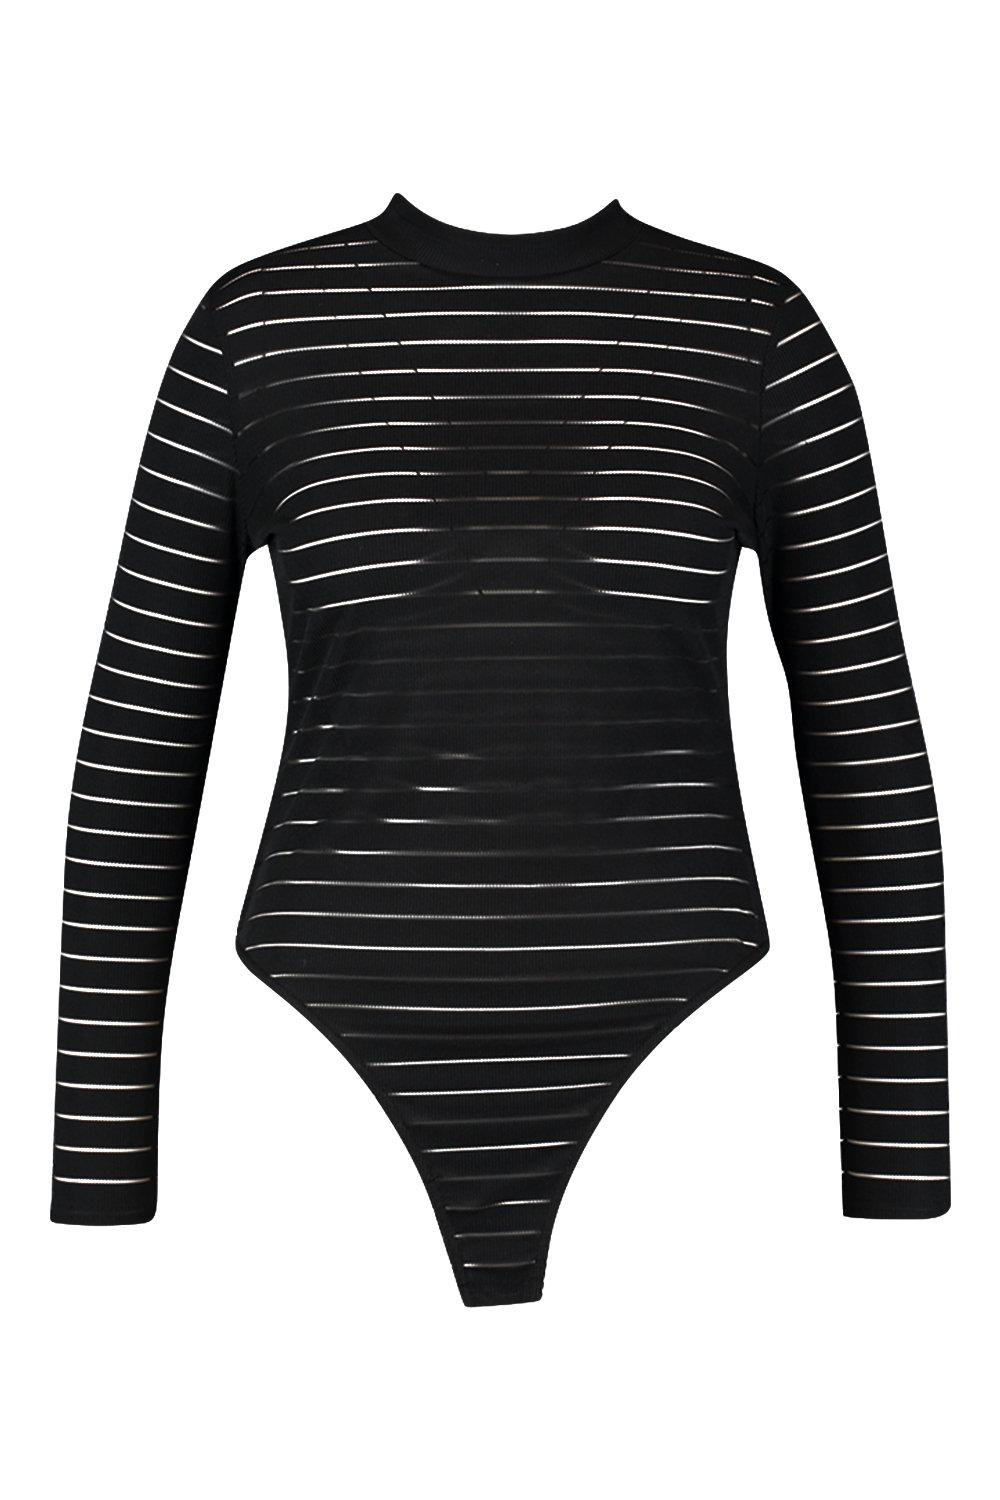 Plus Black Burn Out Striped Mesh Bodysuit  Striped mesh bodysuit, Bodysuit,  Mesh bodysuit